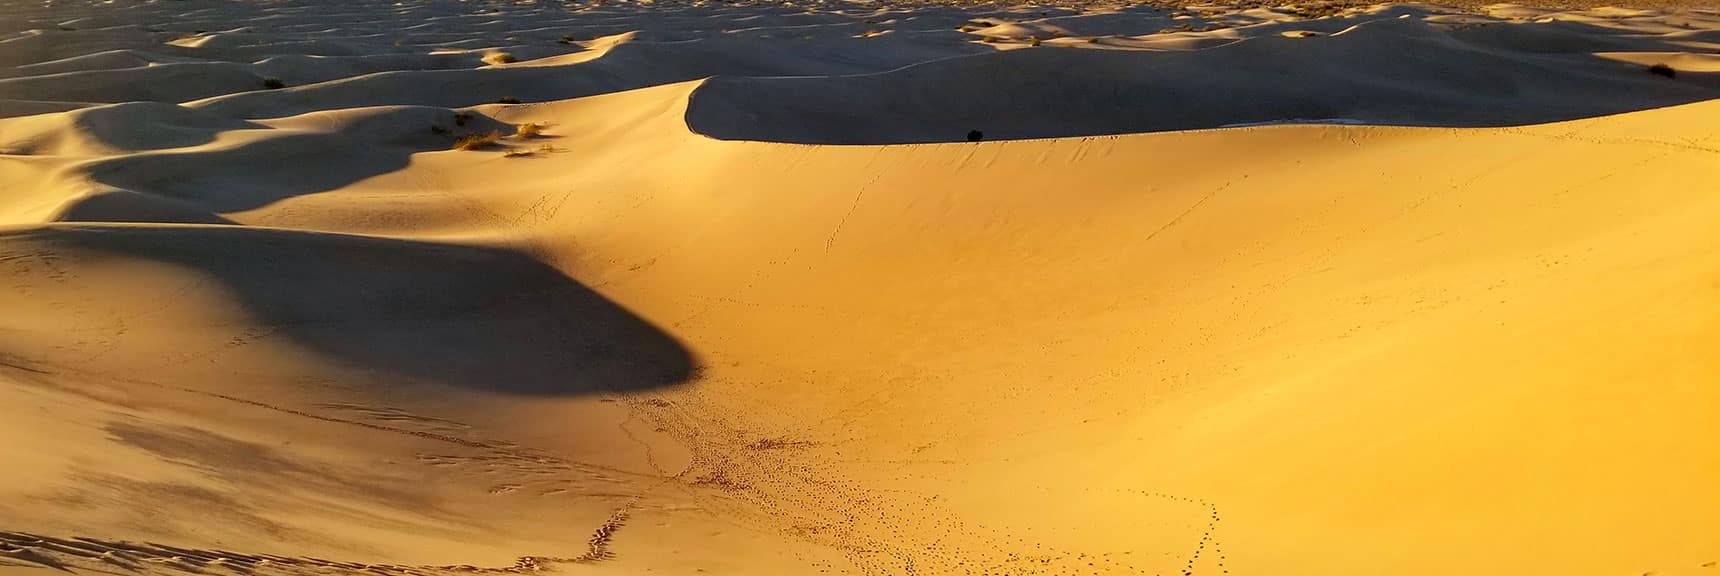 View Southwest | Mesquite Sand Dunes Sunrise | Death Valley National Park, California